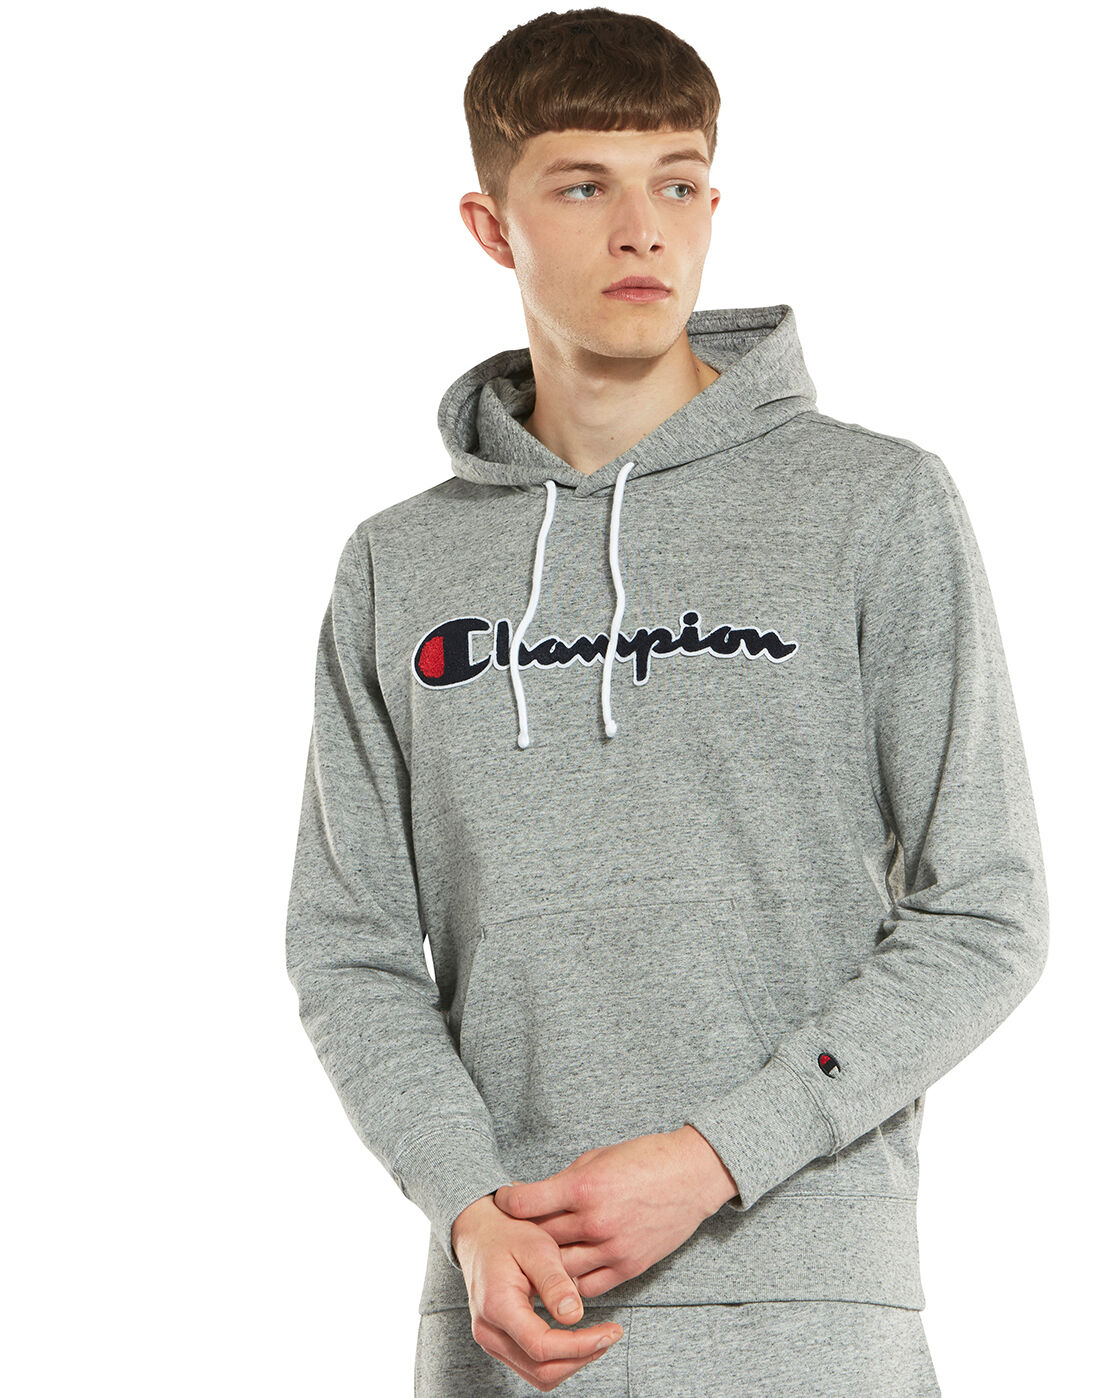 champion hoodie mens grey